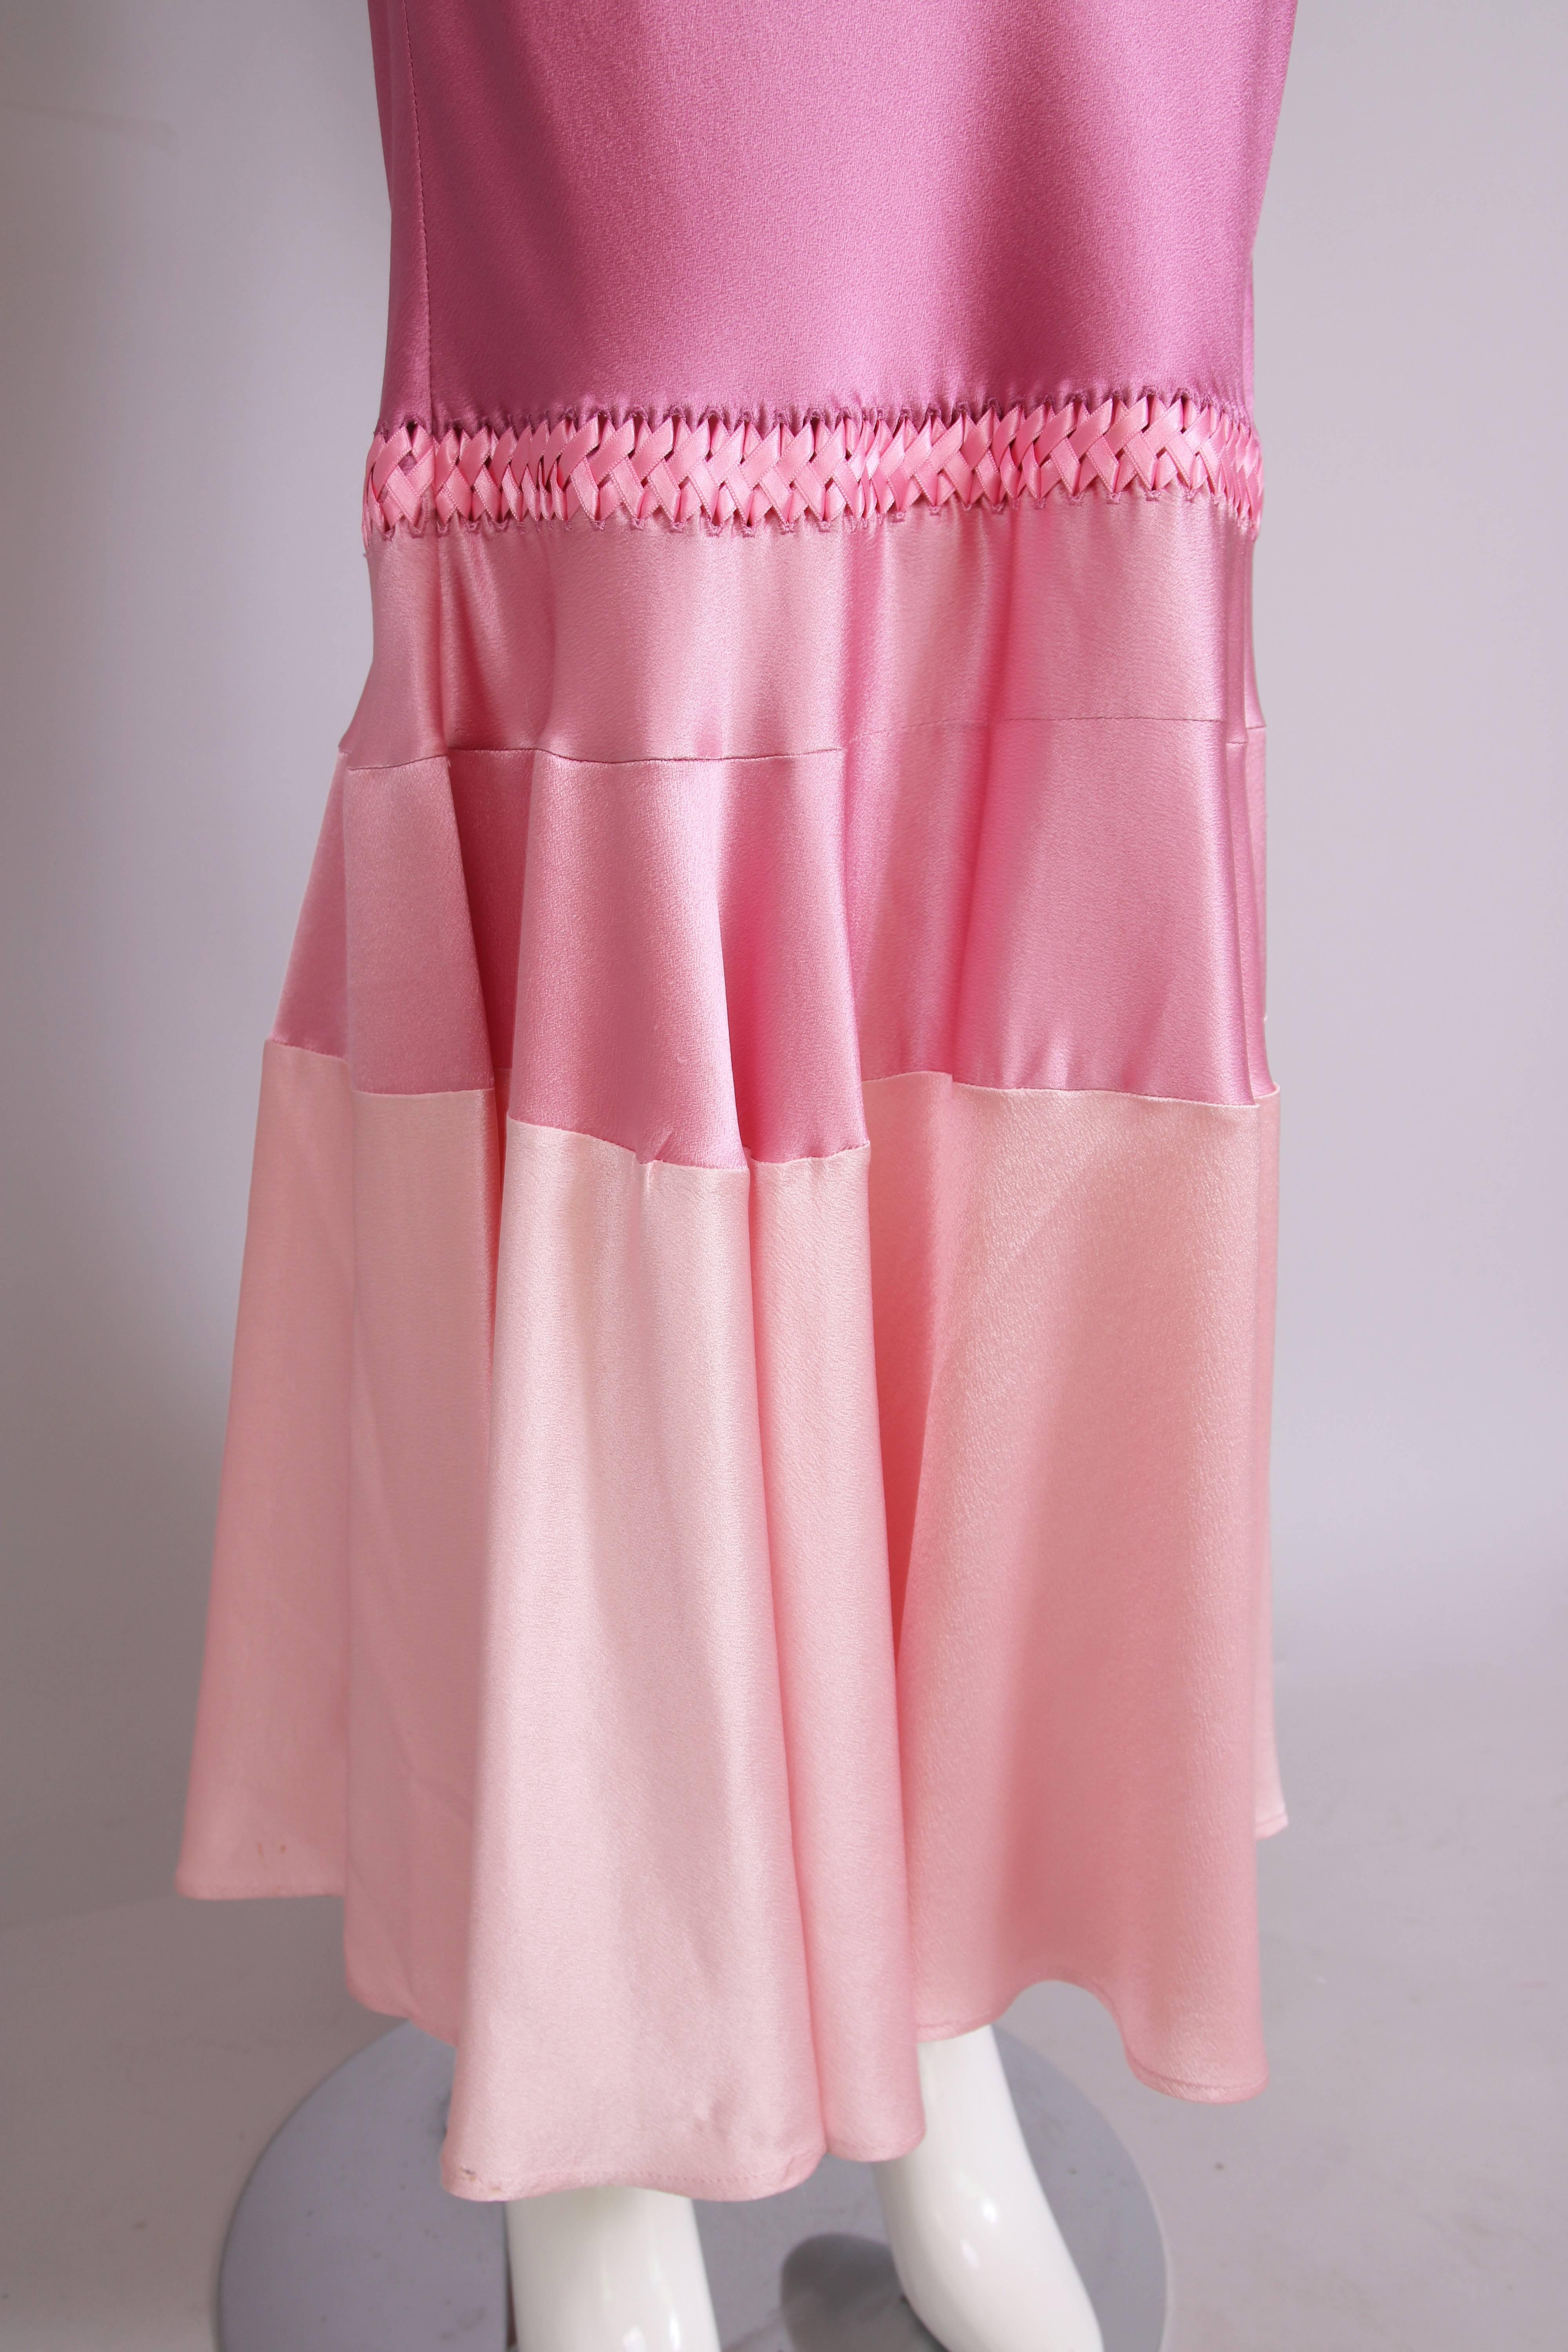 Christian Dior by Galliano Pink Silk Bias Cut Evening Gown W/Cowl Neckline 3